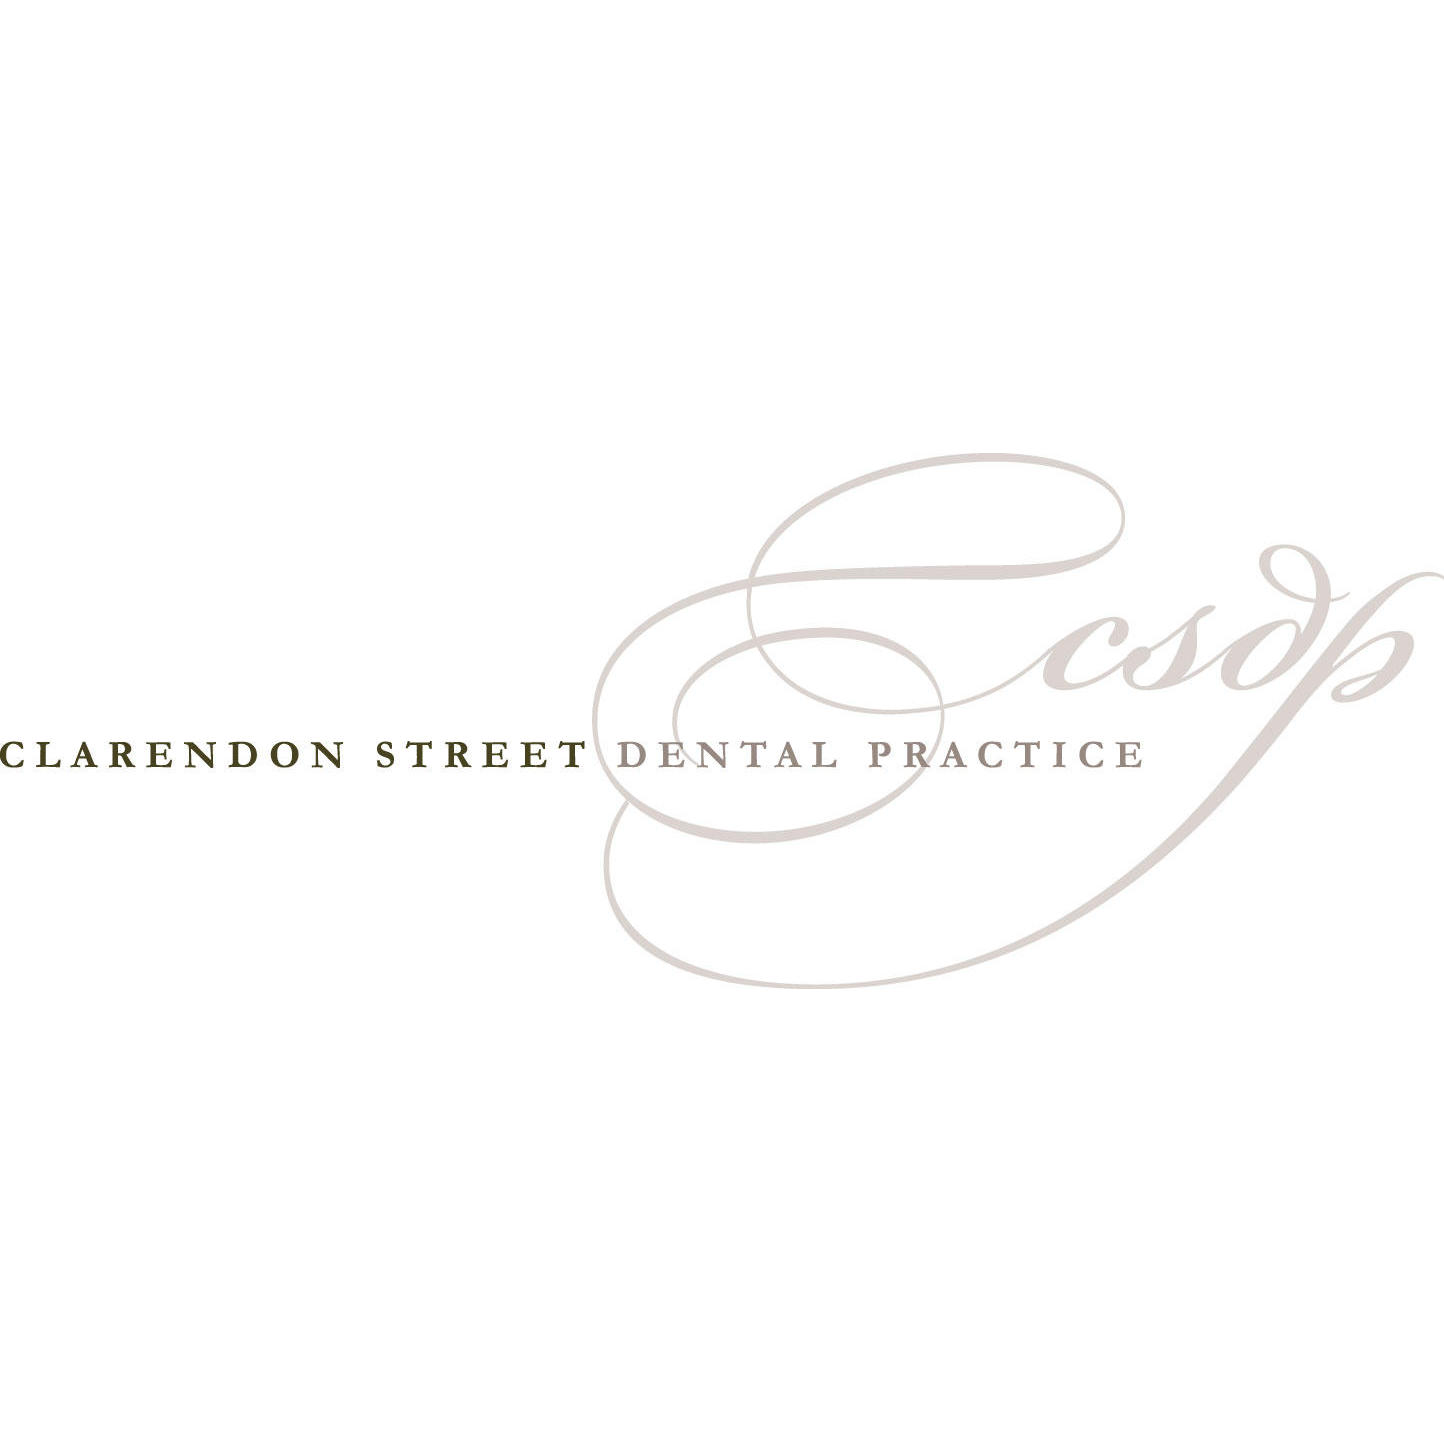 Clarendon Street Dental Practice Logo